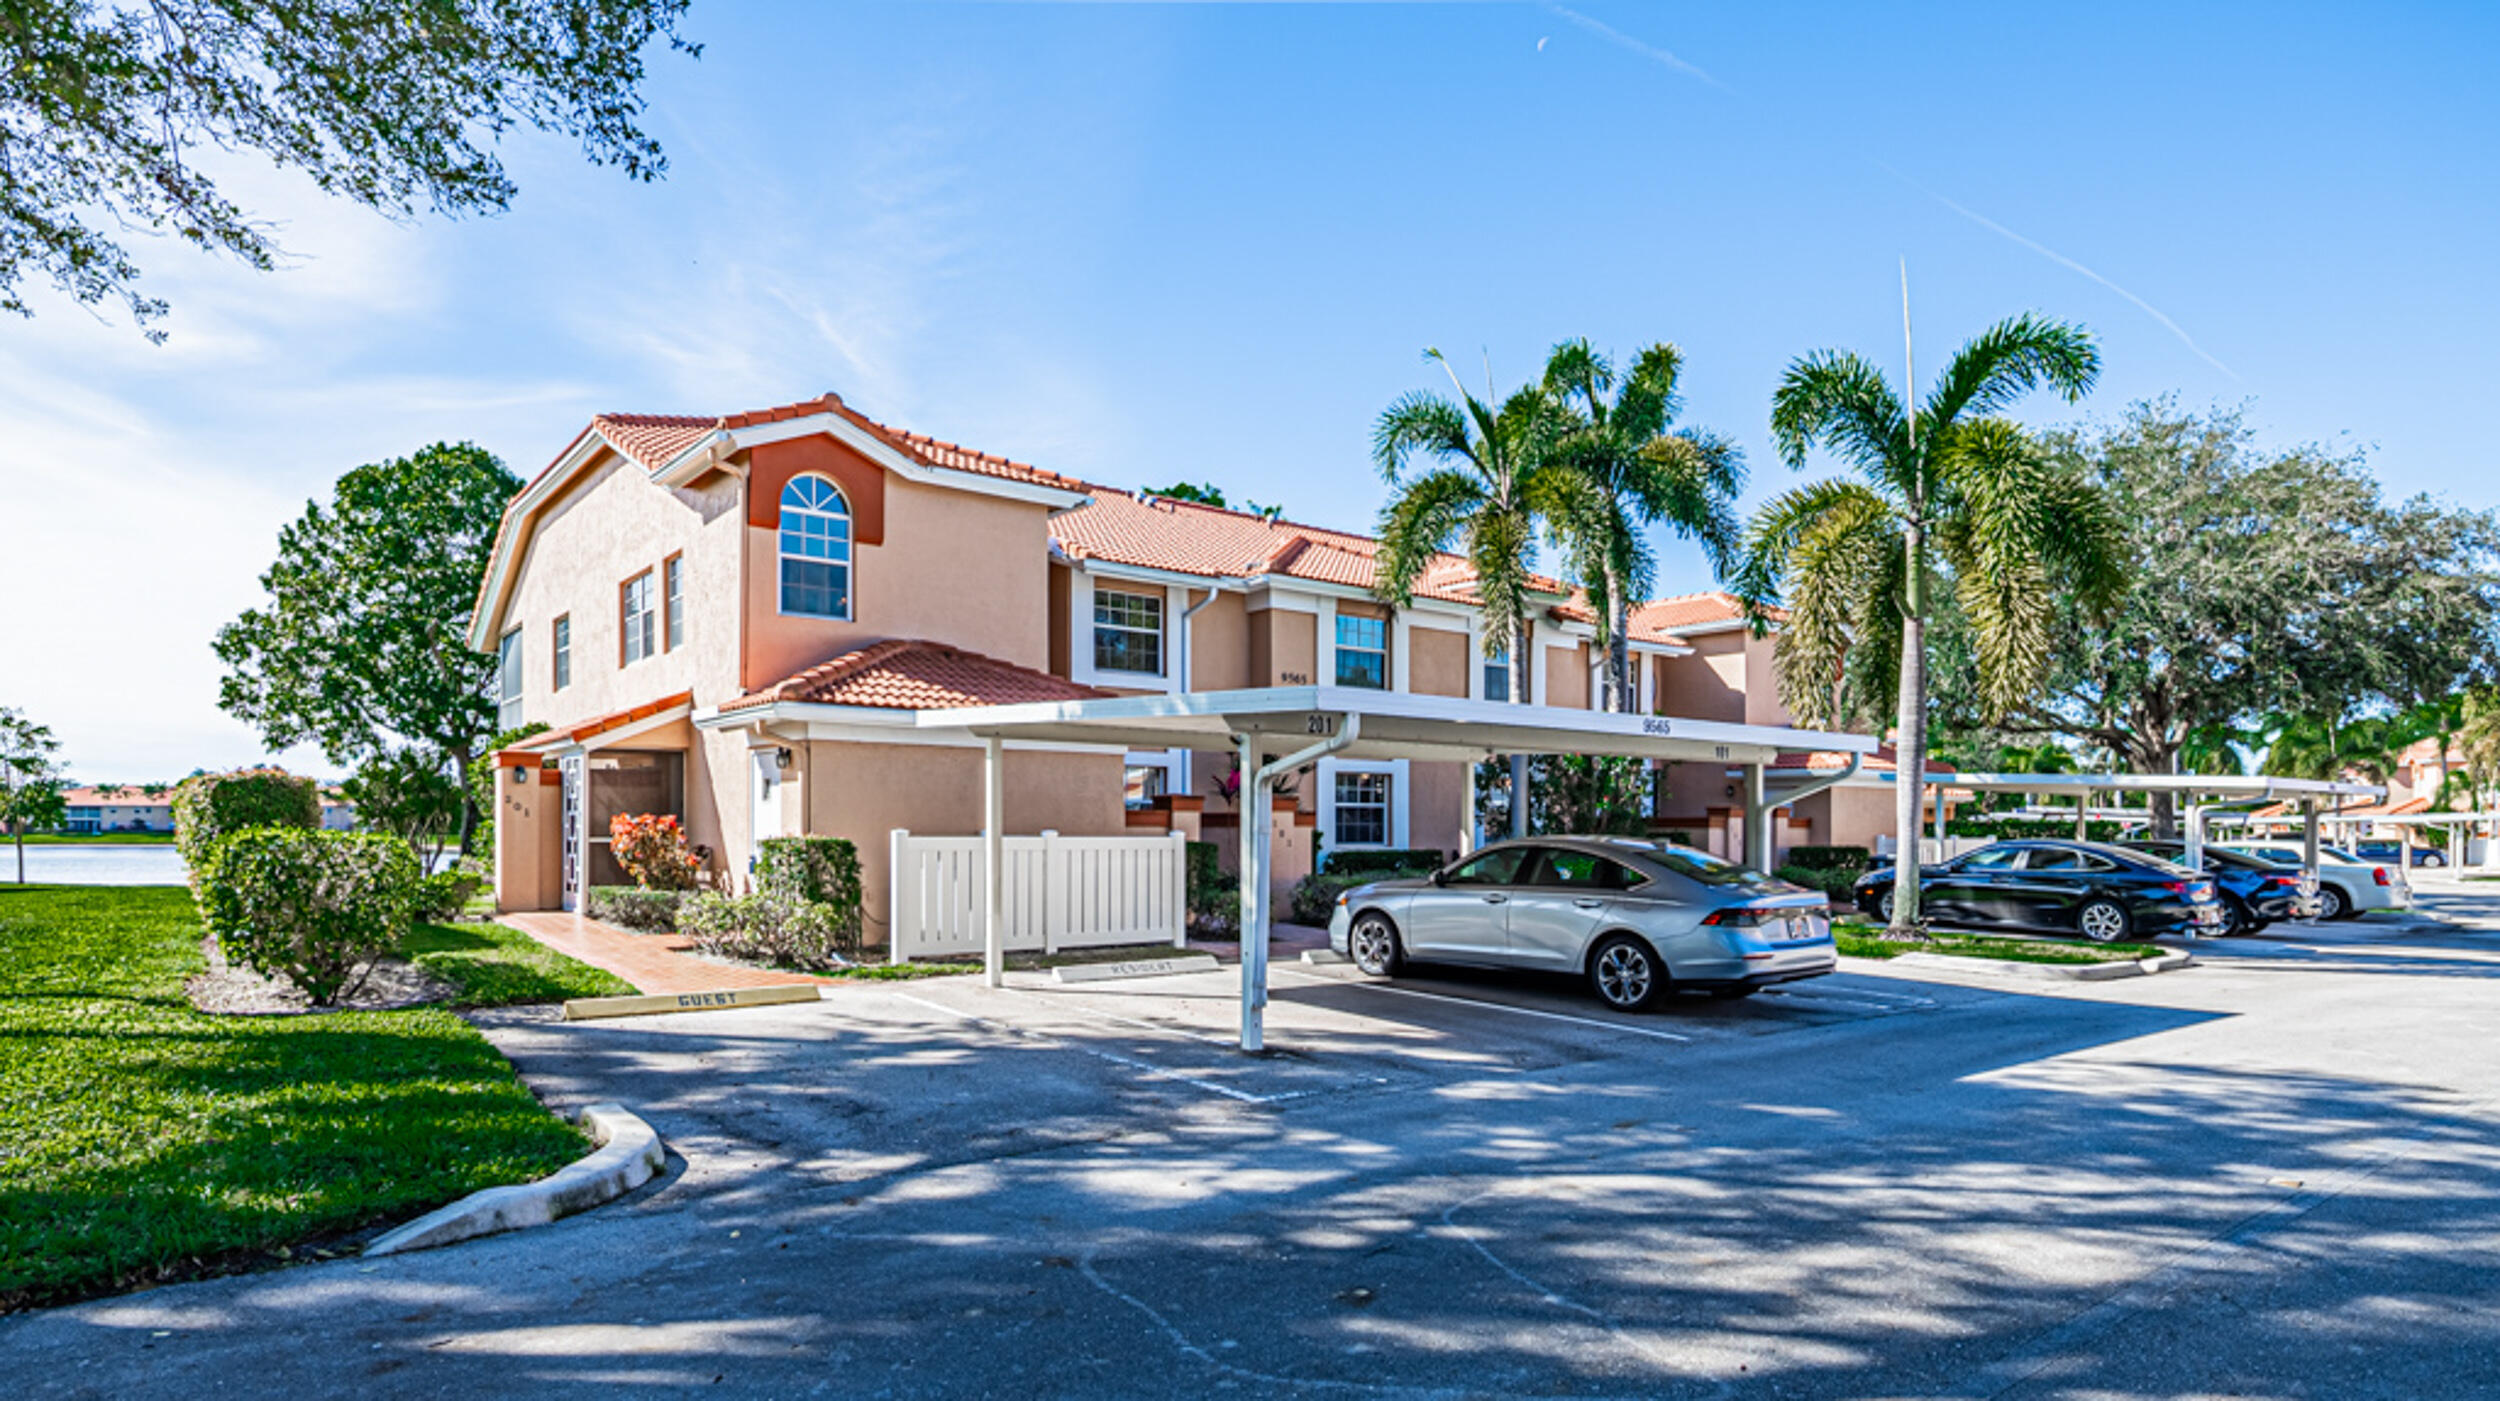 Property for Sale at 9565 Shadybrook Drive 201, Boynton Beach, Palm Beach County, Florida - Bedrooms: 3 
Bathrooms: 2  - $334,900